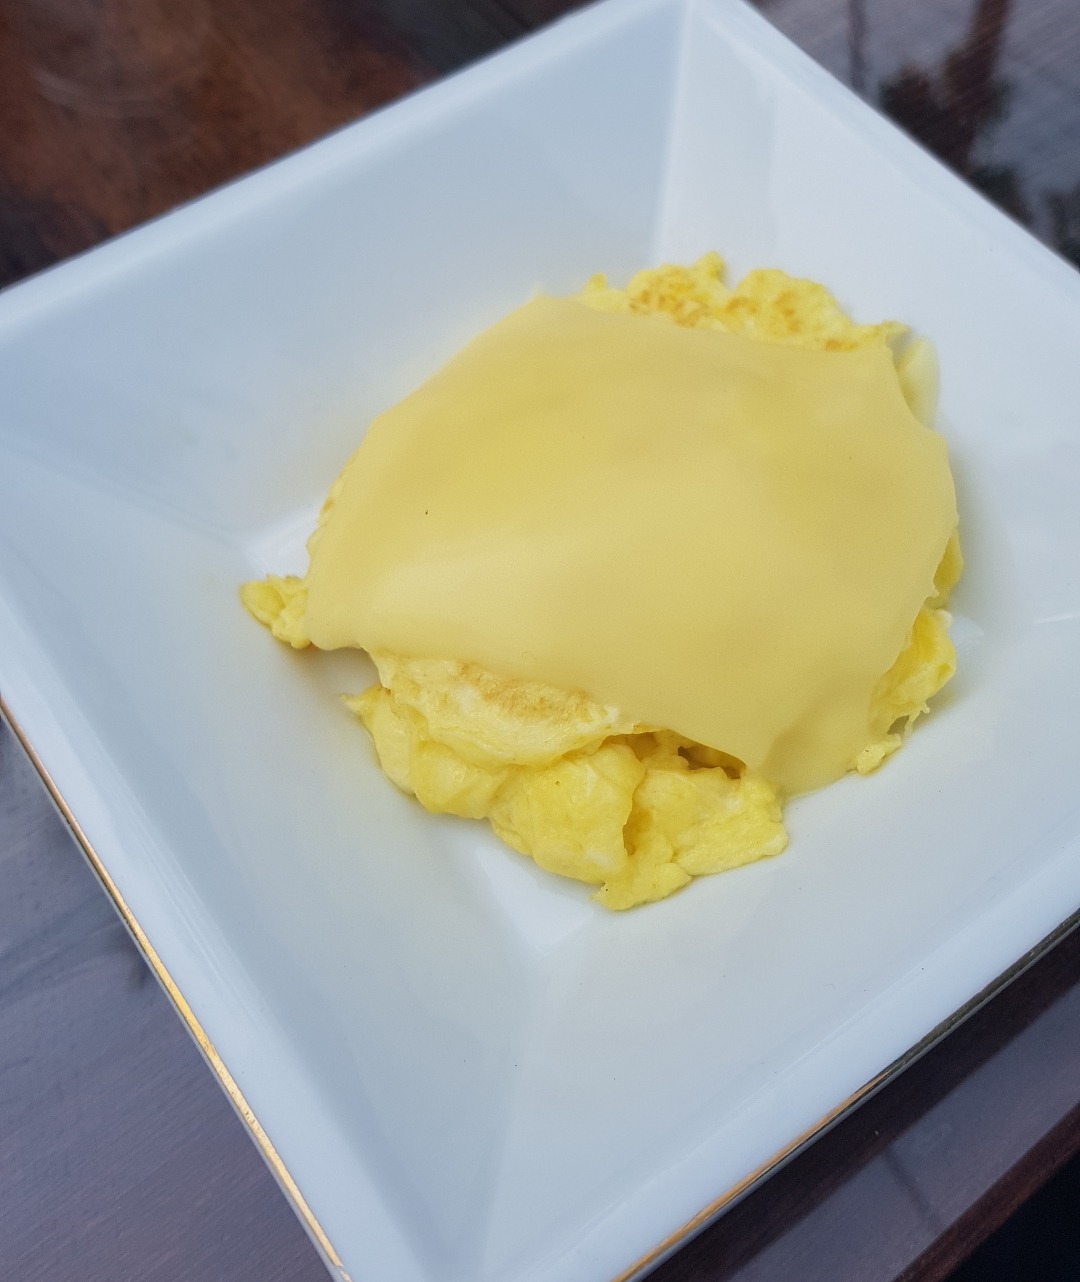 stanbuli egg 👌

Milk+egg+cheese @ فودز آت هوم - البحرين